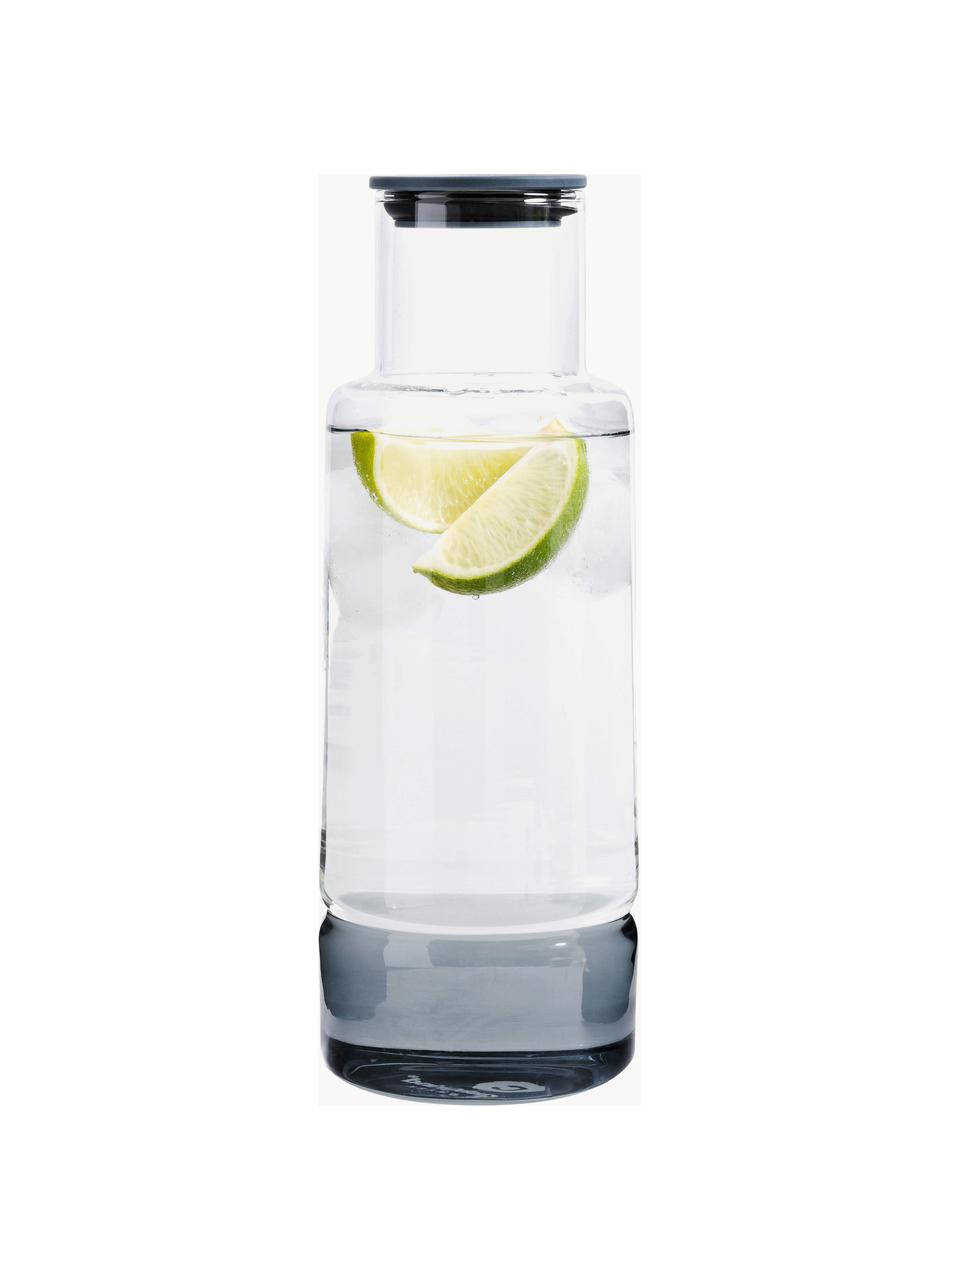 Wasserkaraffe Billund mit Farbverlauf, 1 L, Deckel: Biokomposit, Transparent, Dunkelblau, 1 L